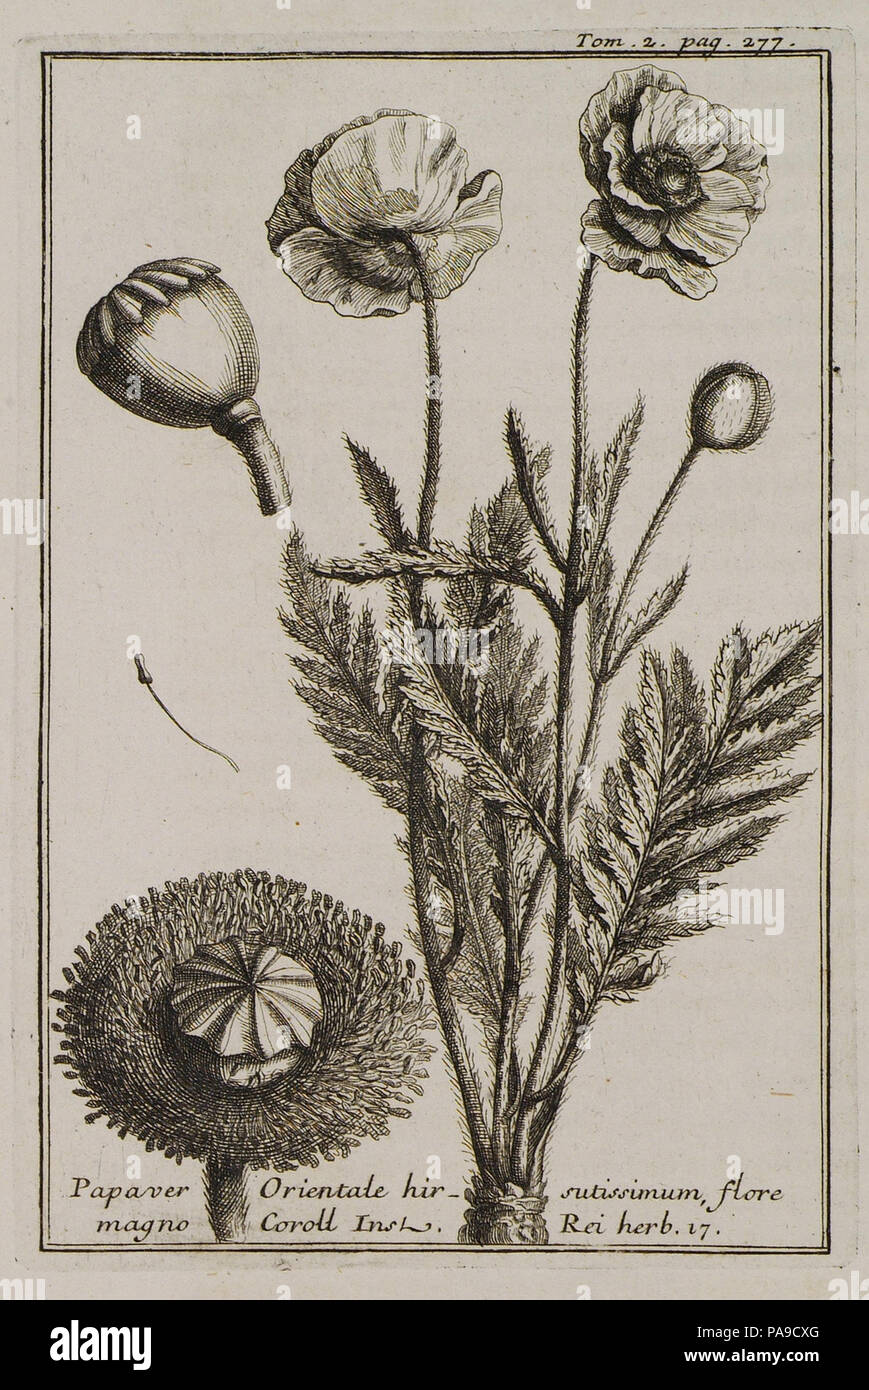 191 Papaver Orientale hirsutissimum, flore magno Coroll Inst Rei herb 17 - Tournefort Joseph Pitton De - 1717 Stock Photo